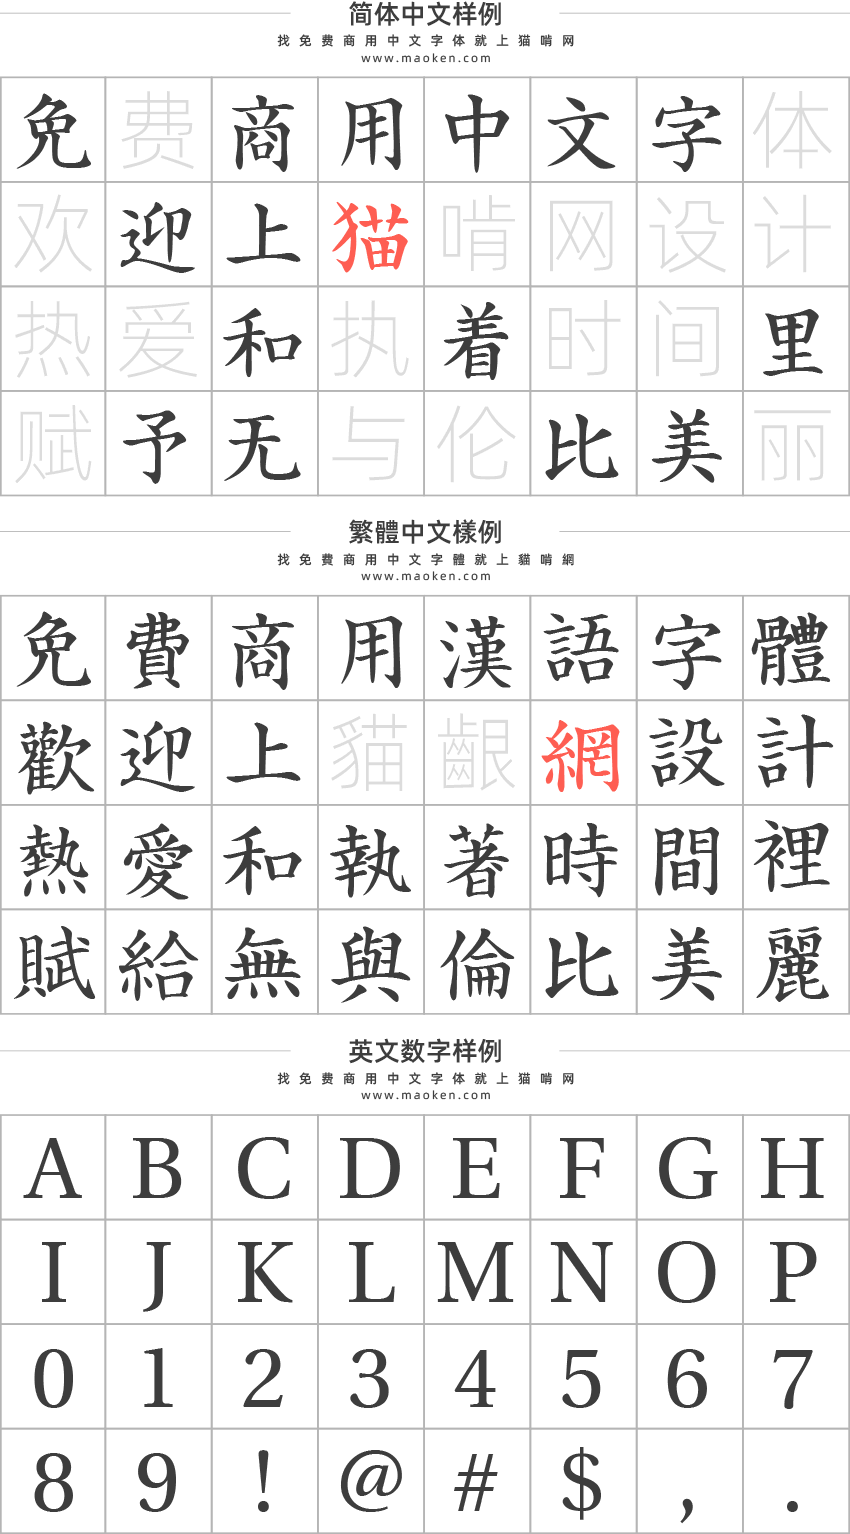 活字 旧1号 漢字 ゴシック体 旧字 異字 許容字体活版印刷